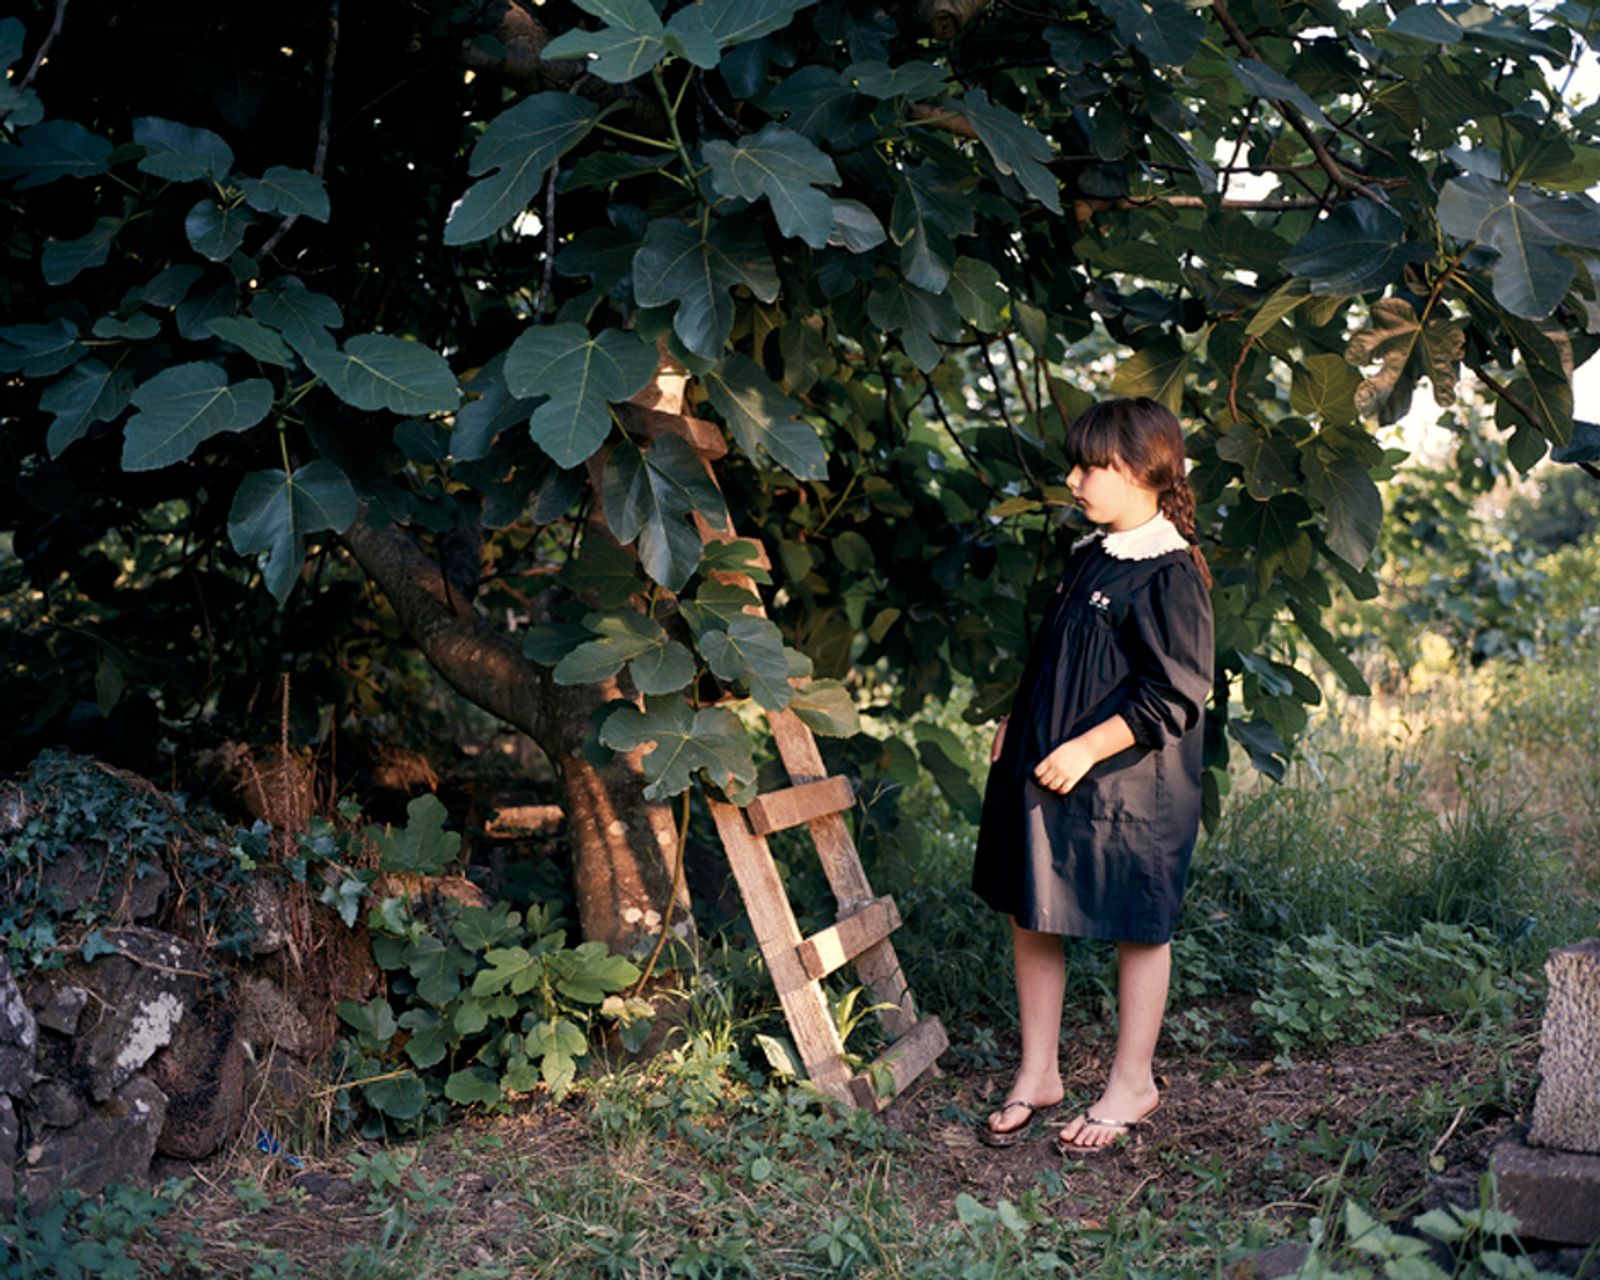 © Marisa Portolese - From the series Antonia's Garden 24 x 30 inches, c-print, 2011